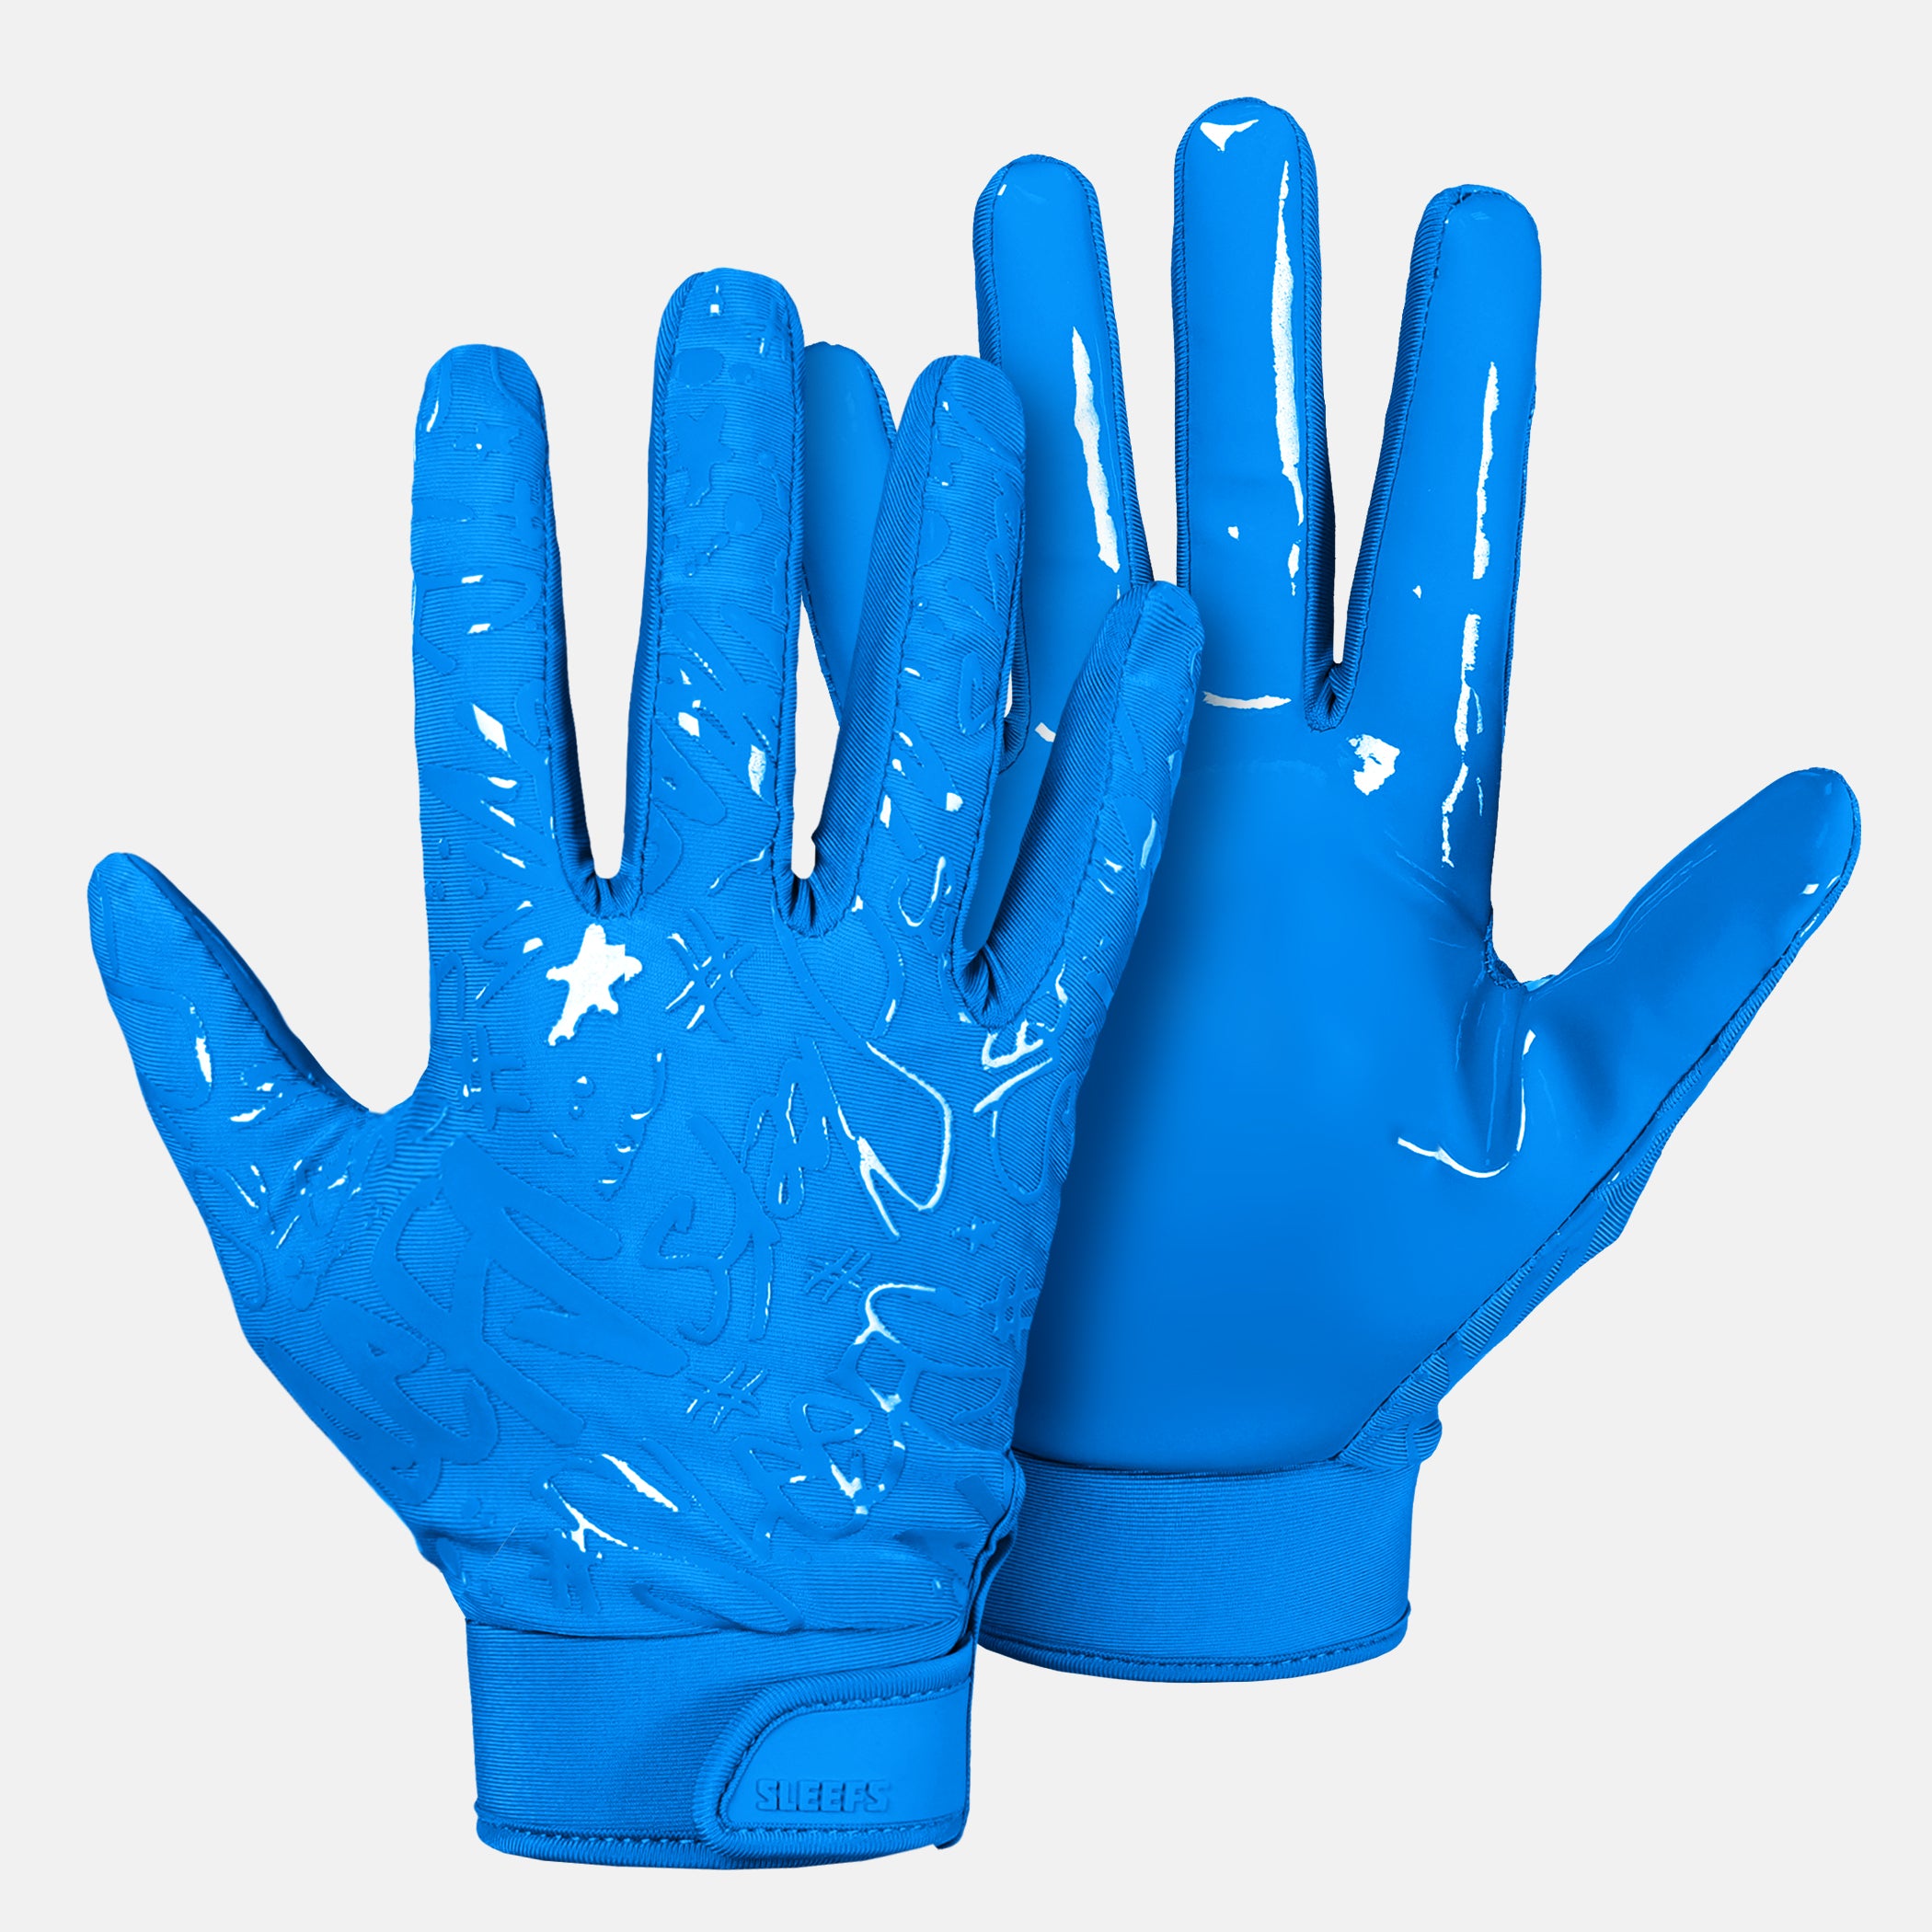 How To Make Football Gloves Sticky | lupon.gov.ph